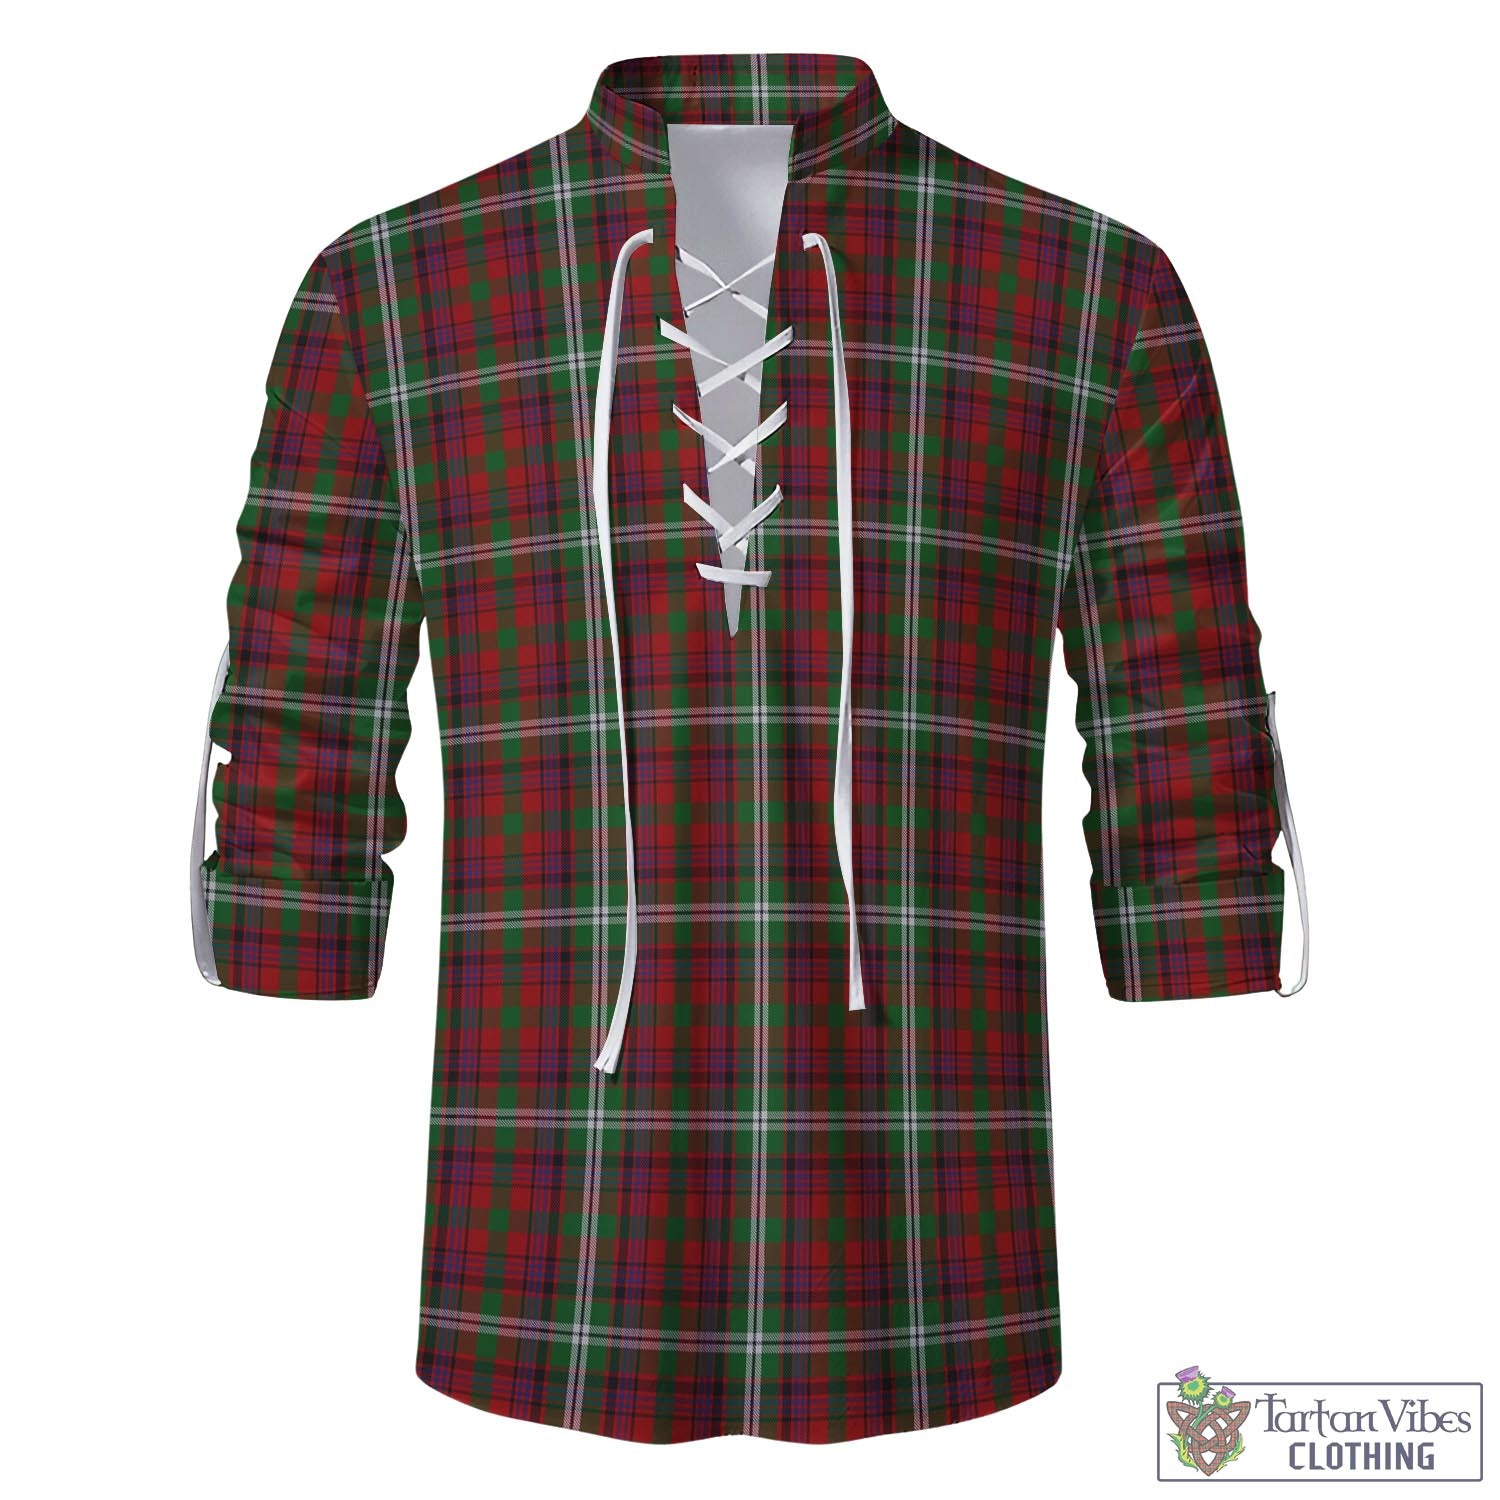 Tartan Vibes Clothing Maguire Tartan Men's Scottish Traditional Jacobite Ghillie Kilt Shirt